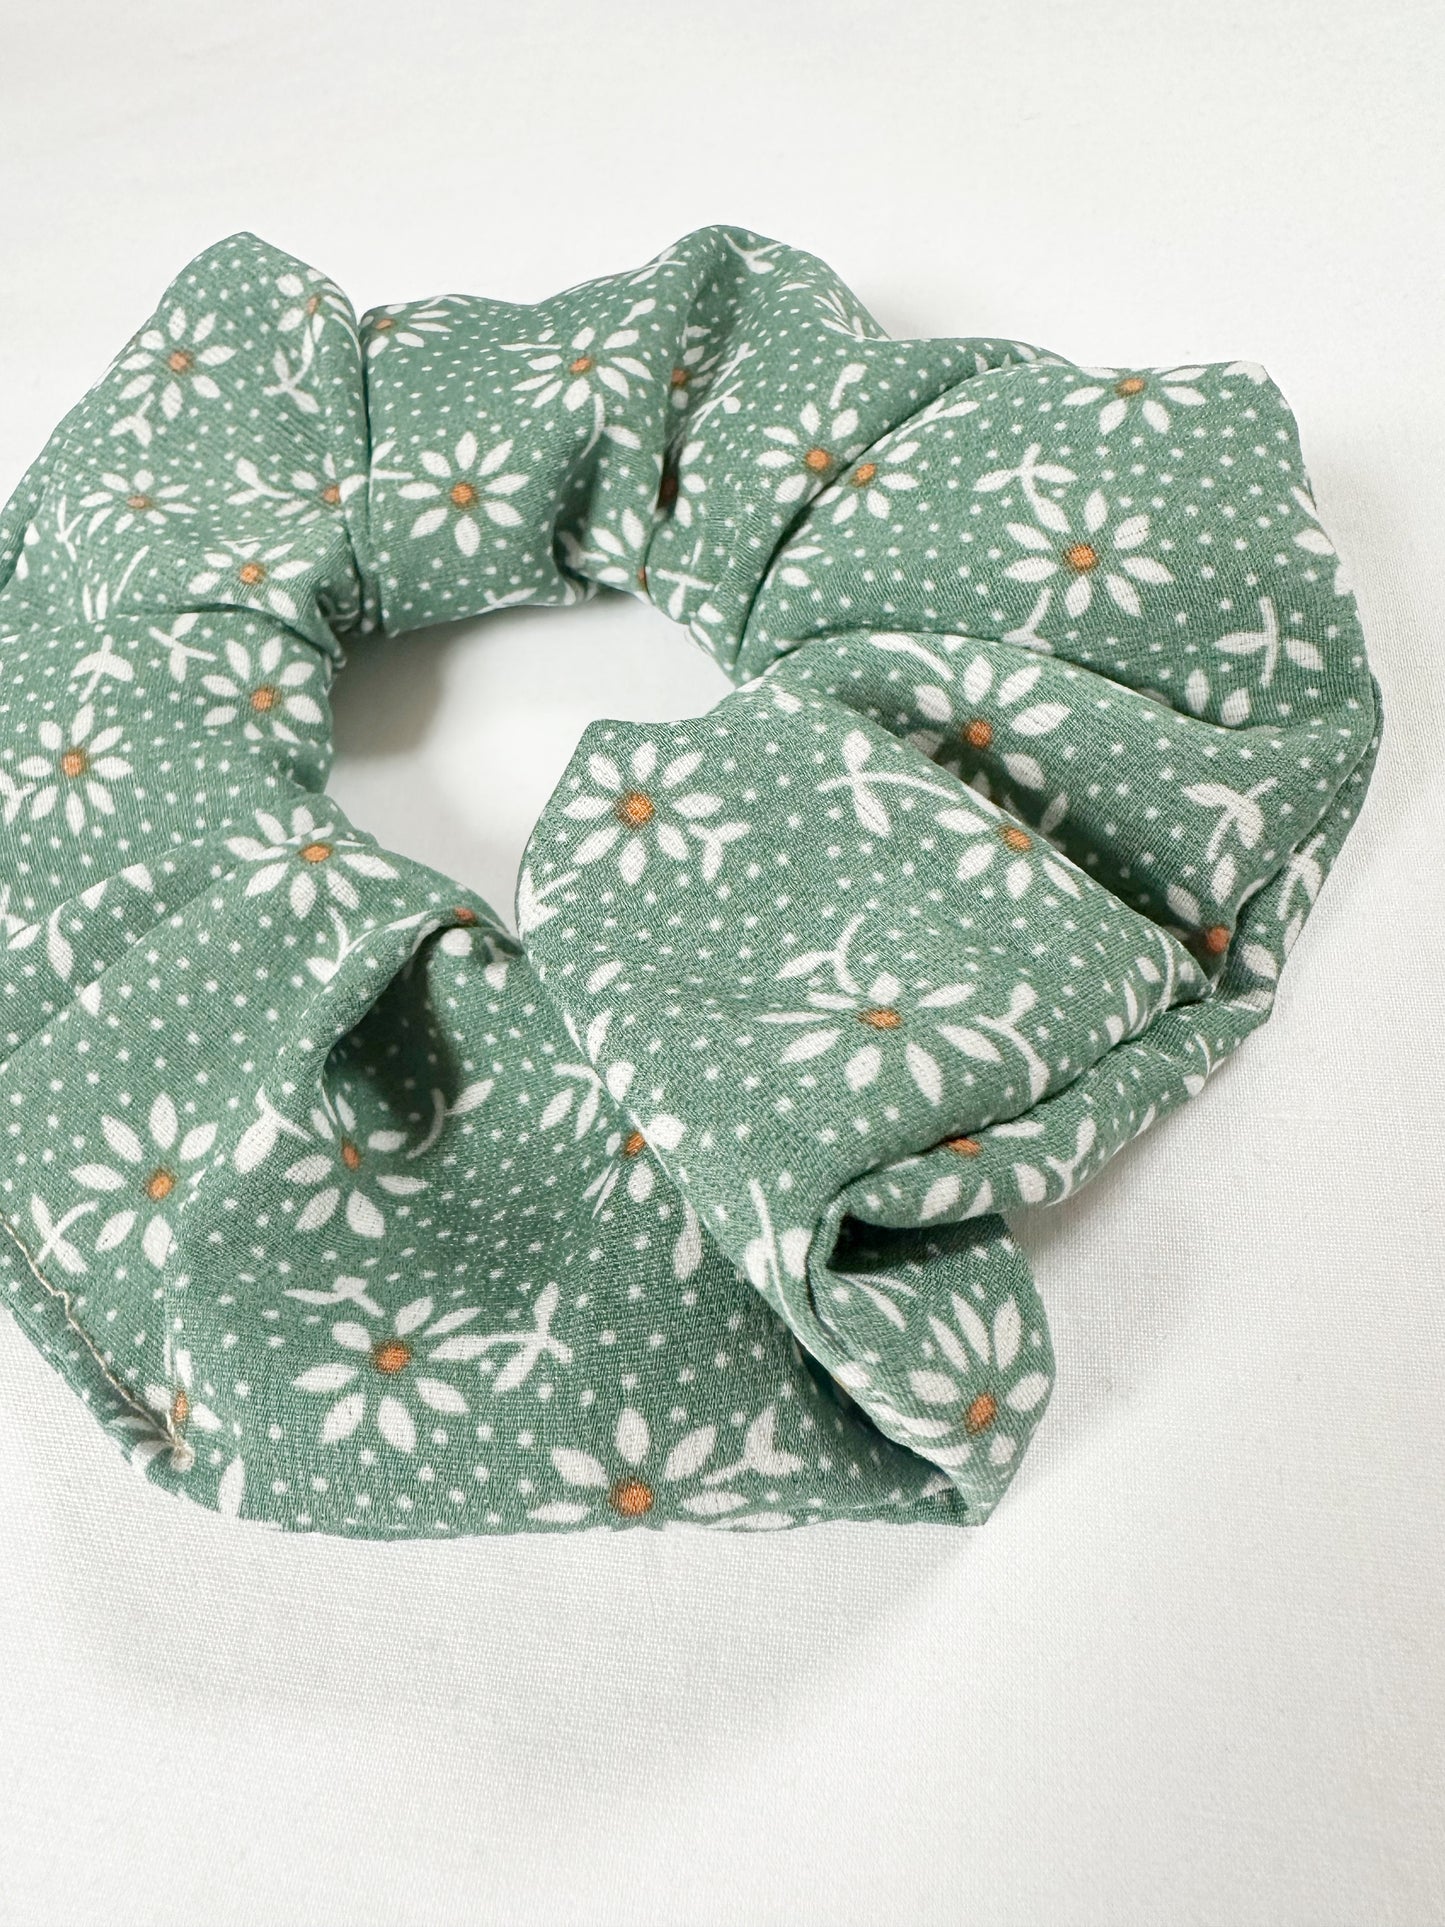 OG scrunchie in green daisy floral